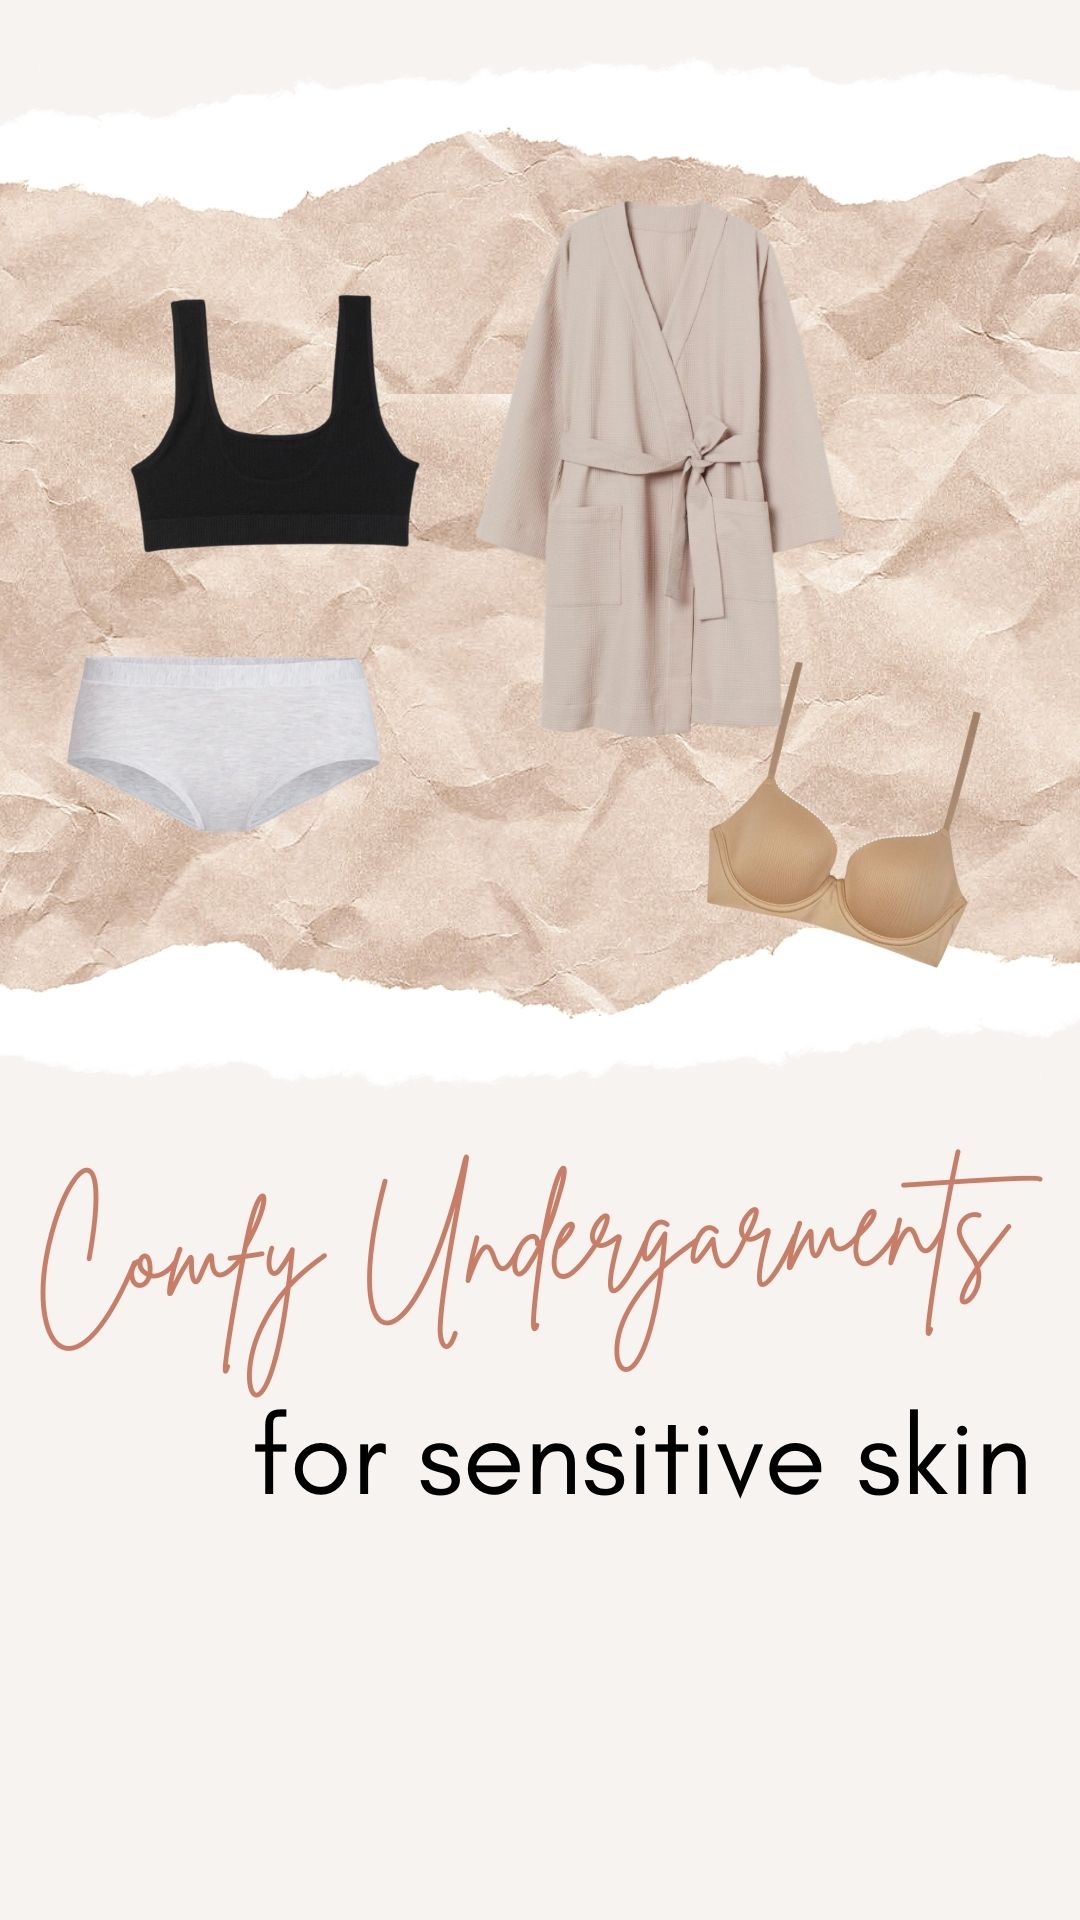 Undergarments for Sensitive Skin